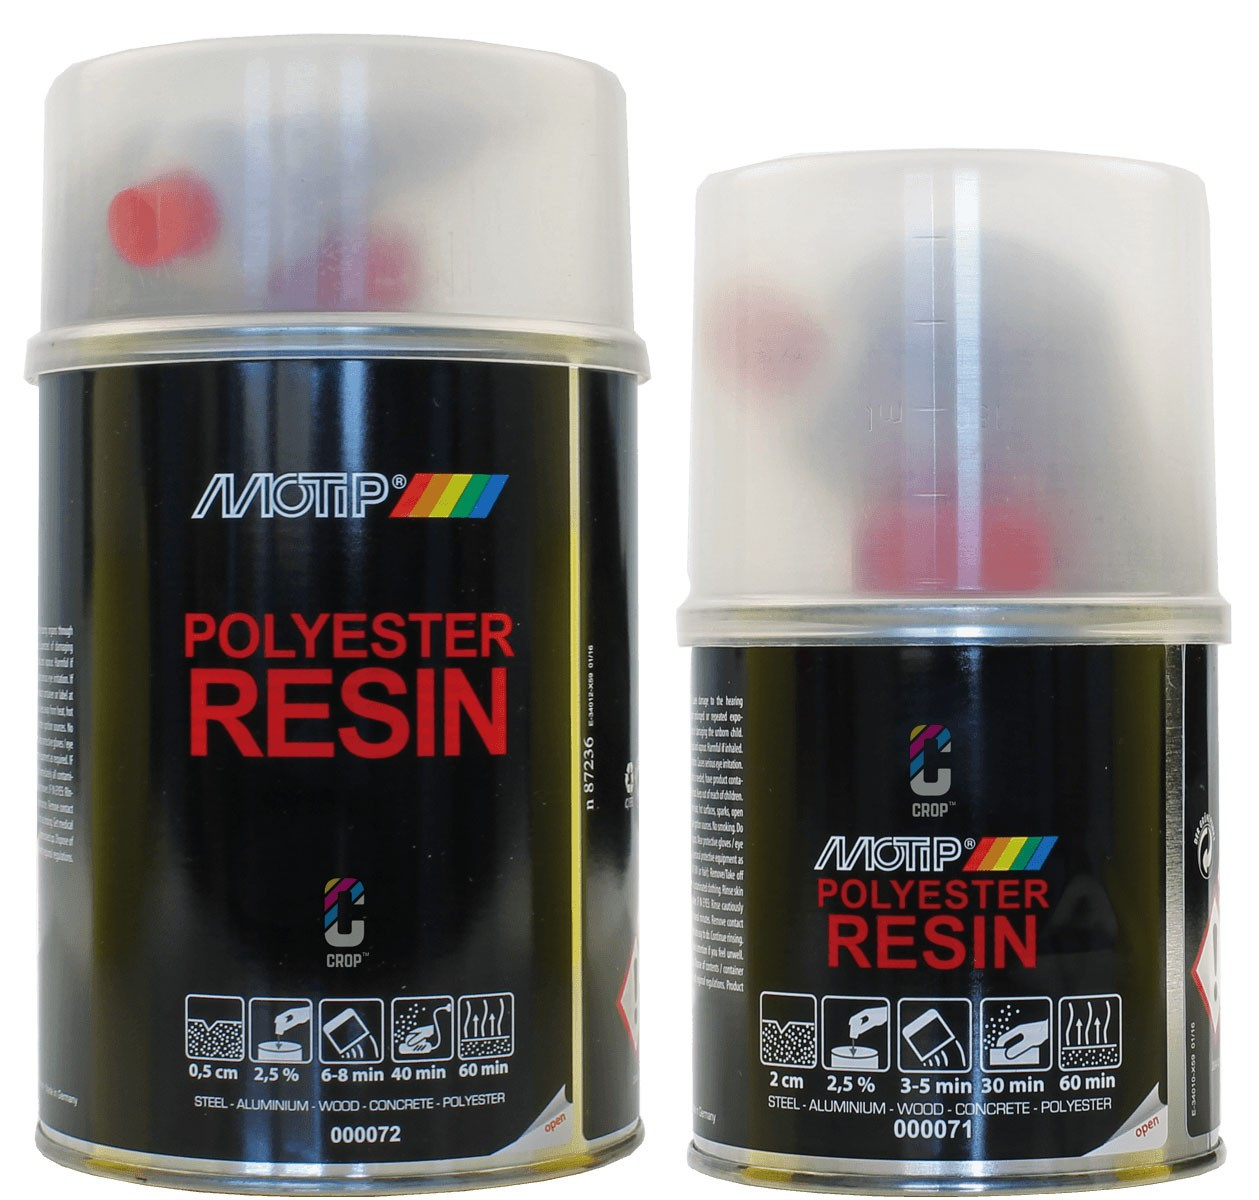 Caius uitgehongerd verwarring MoTip 2K Polyester Resin + Hardener - CROP